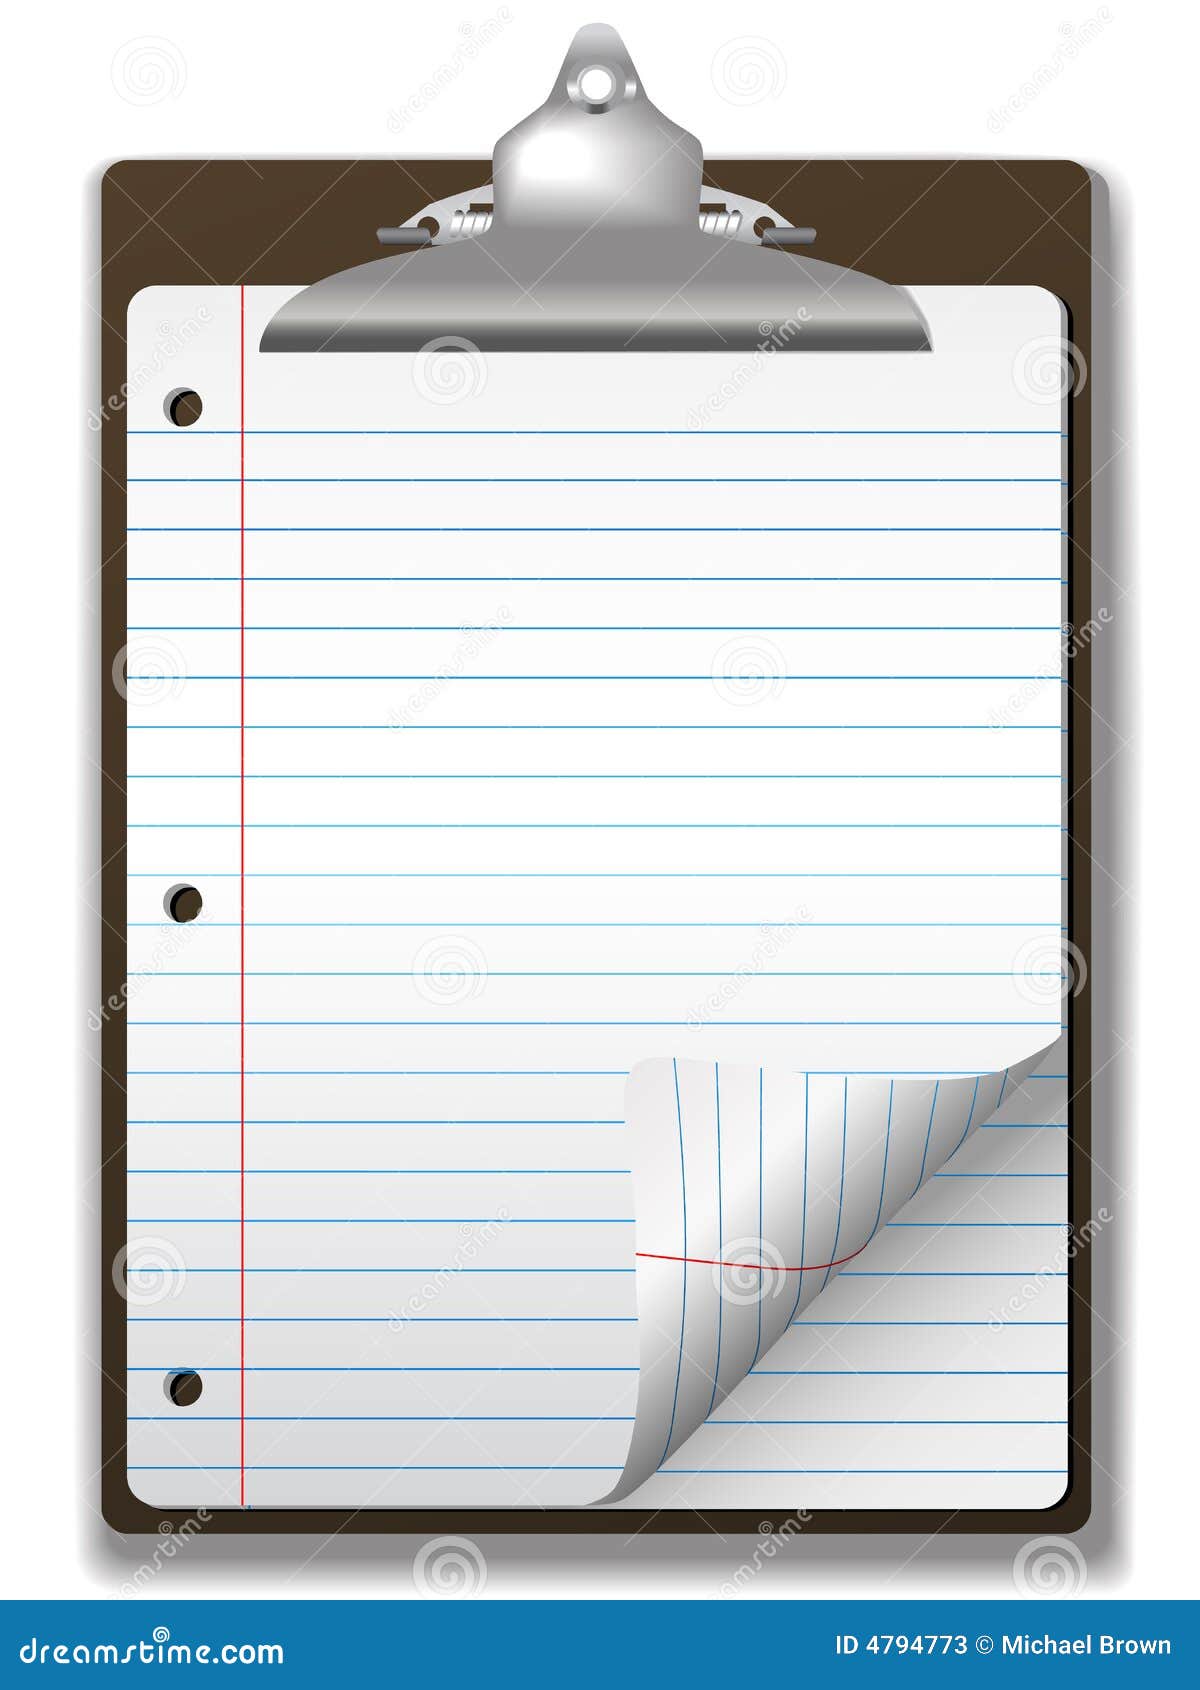 clipboard school ruled notebook paper